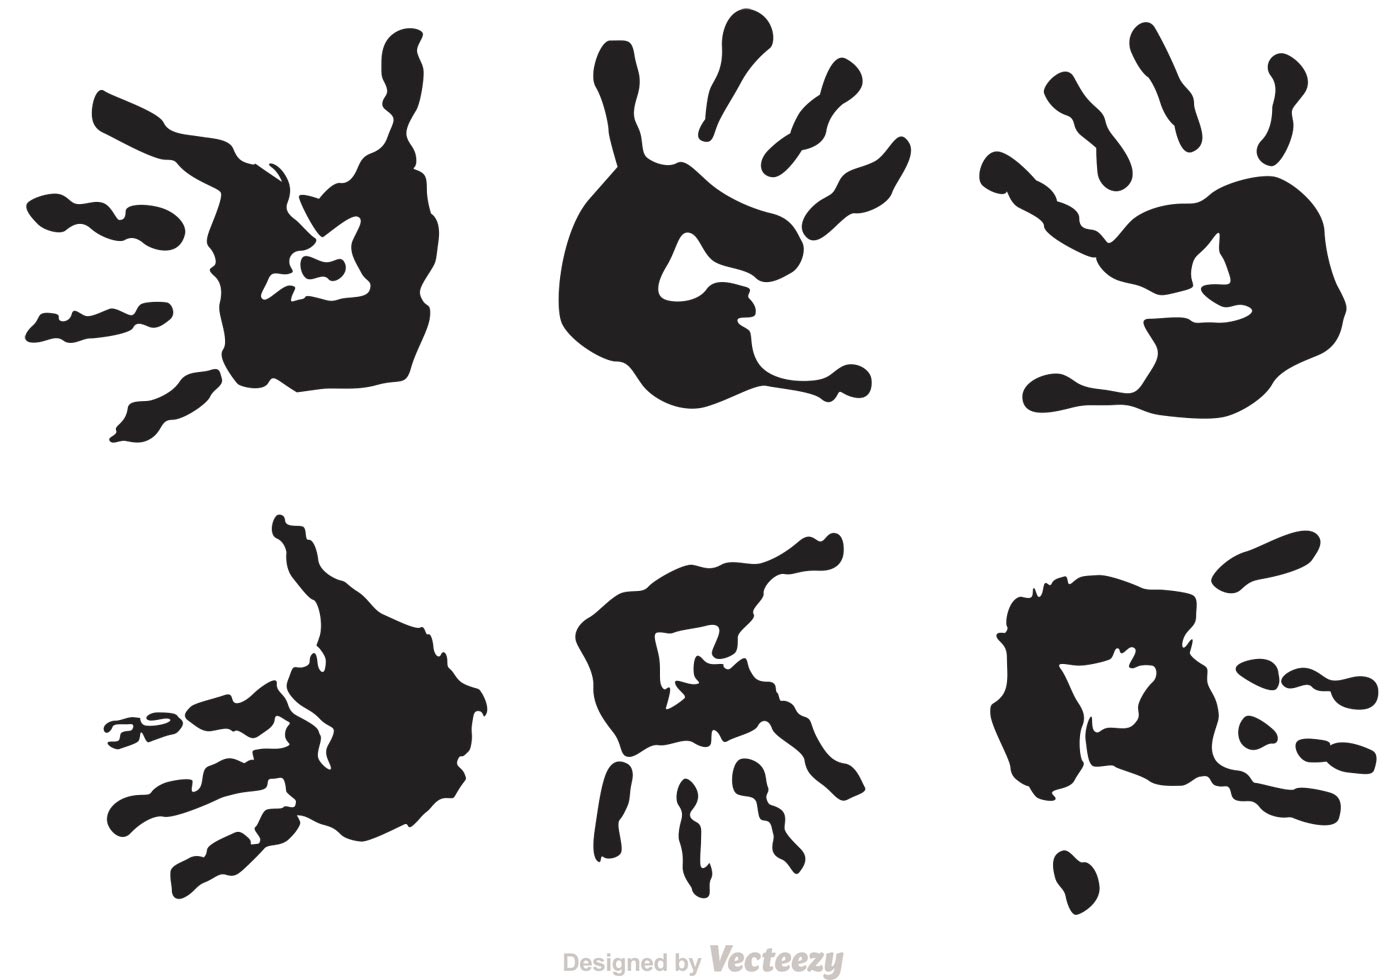 Handprint Free Vector Art - (4190 Free Downloads)